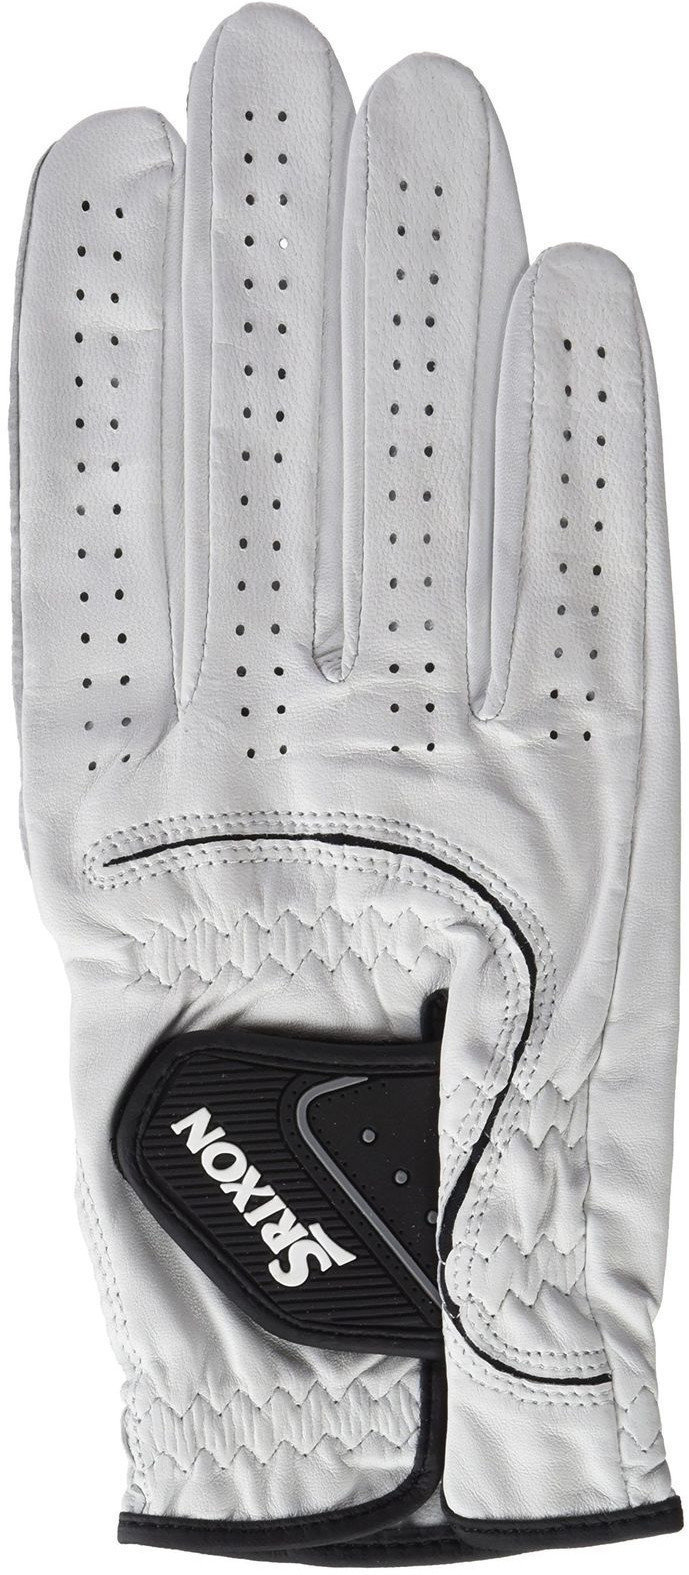 Rękawice Srixon Leather Glove Wht M